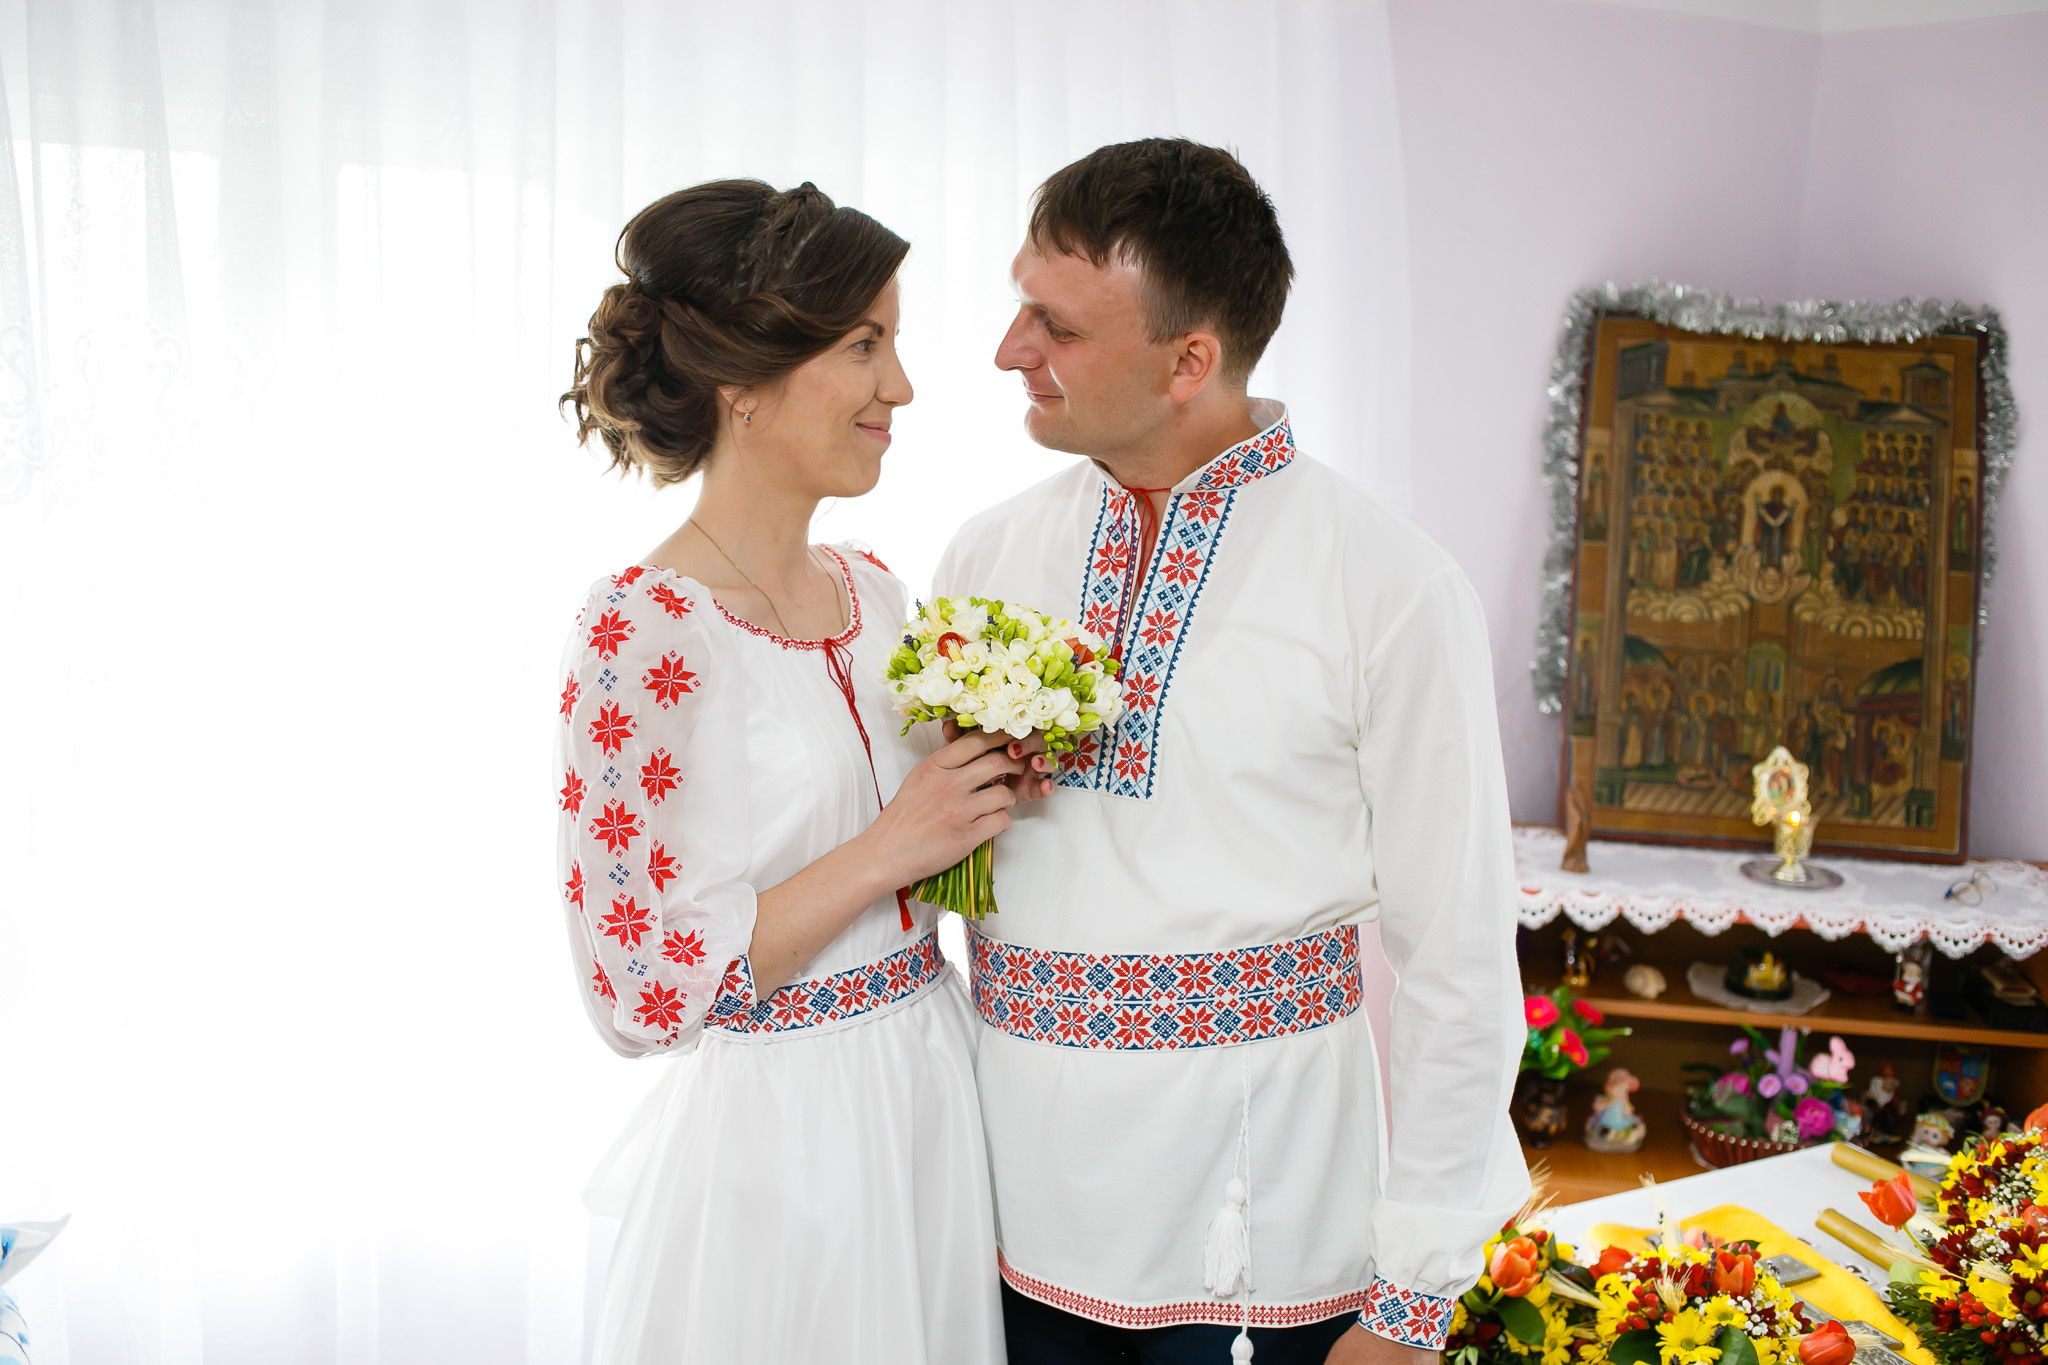 Nuntă tradițională Elisabeta și Alexandru fotograf profesionist nunta Iasi www.paulpadurariu.ro © 2018 Paul Padurariu pregatiri miri 4